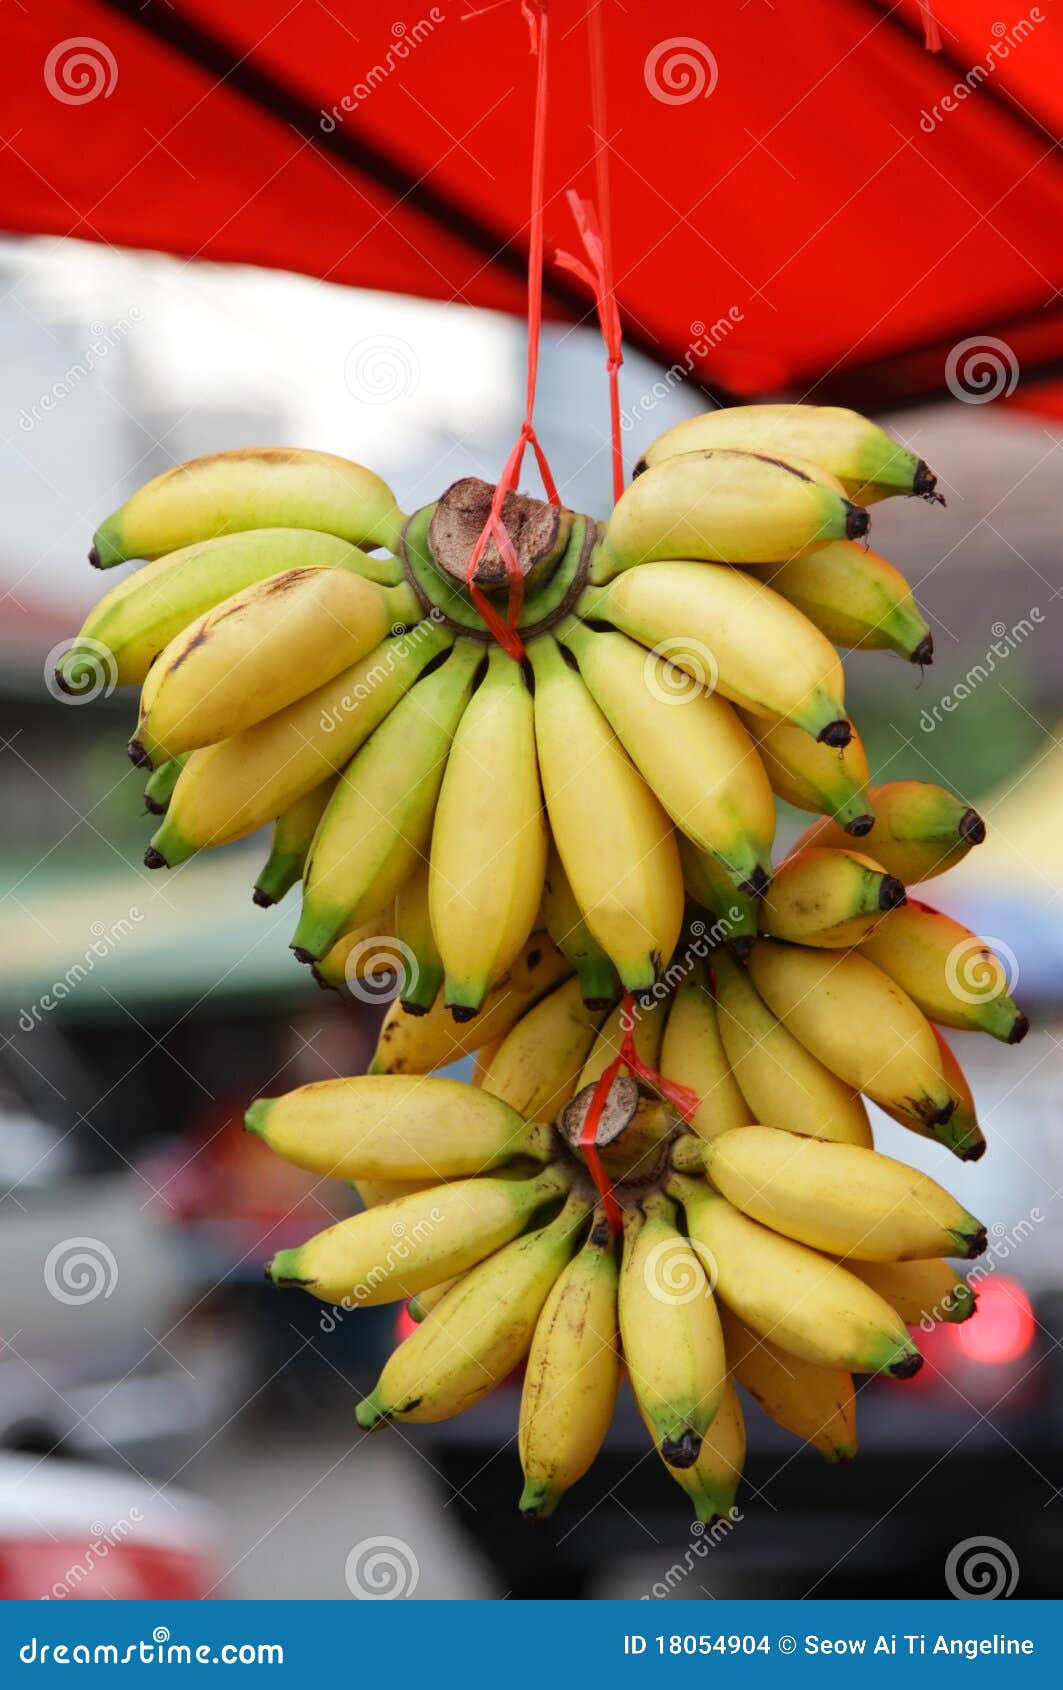 https://thumbs.dreamstime.com/z/ripe-bananas-18054904.jpg